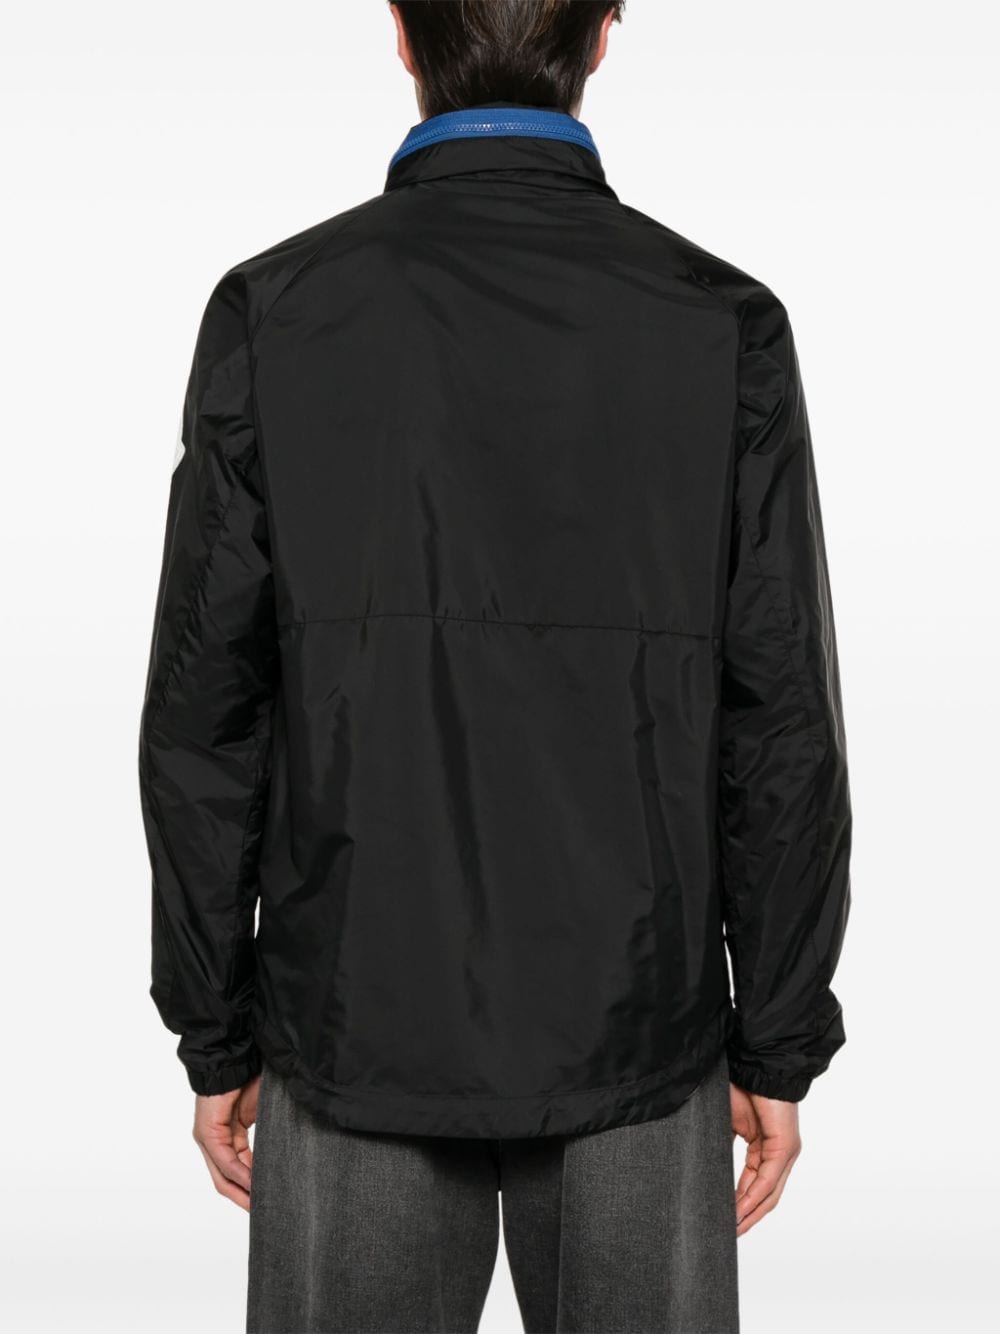 Black Octano jacket